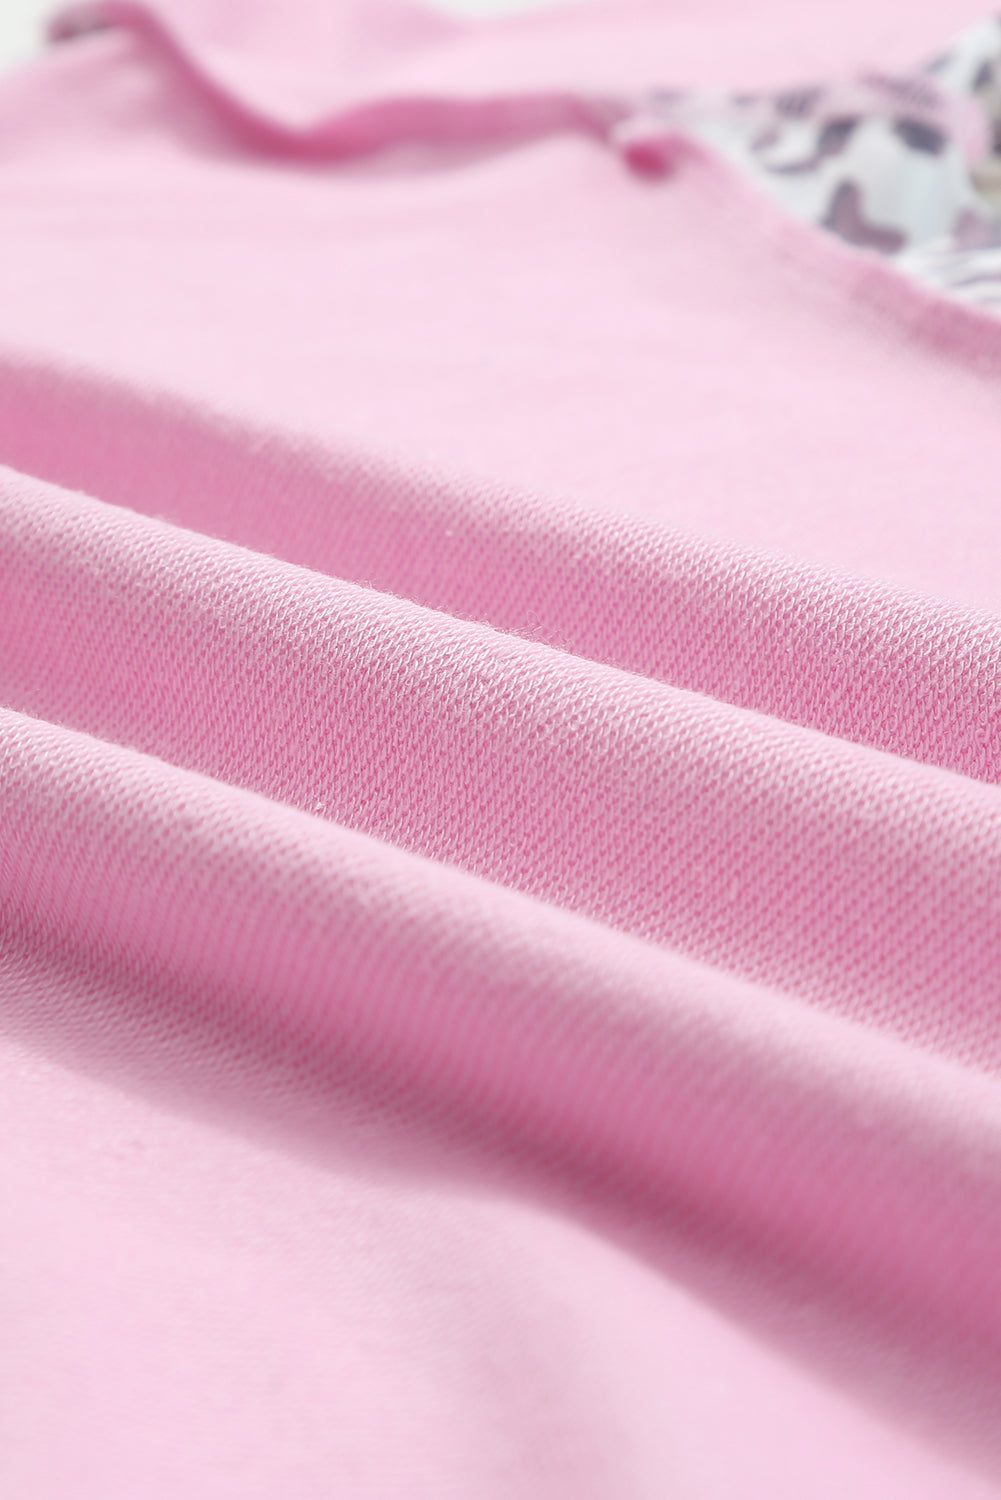 Pink Exposed Seam Leopard Splicing Plus Size Sweatshirt